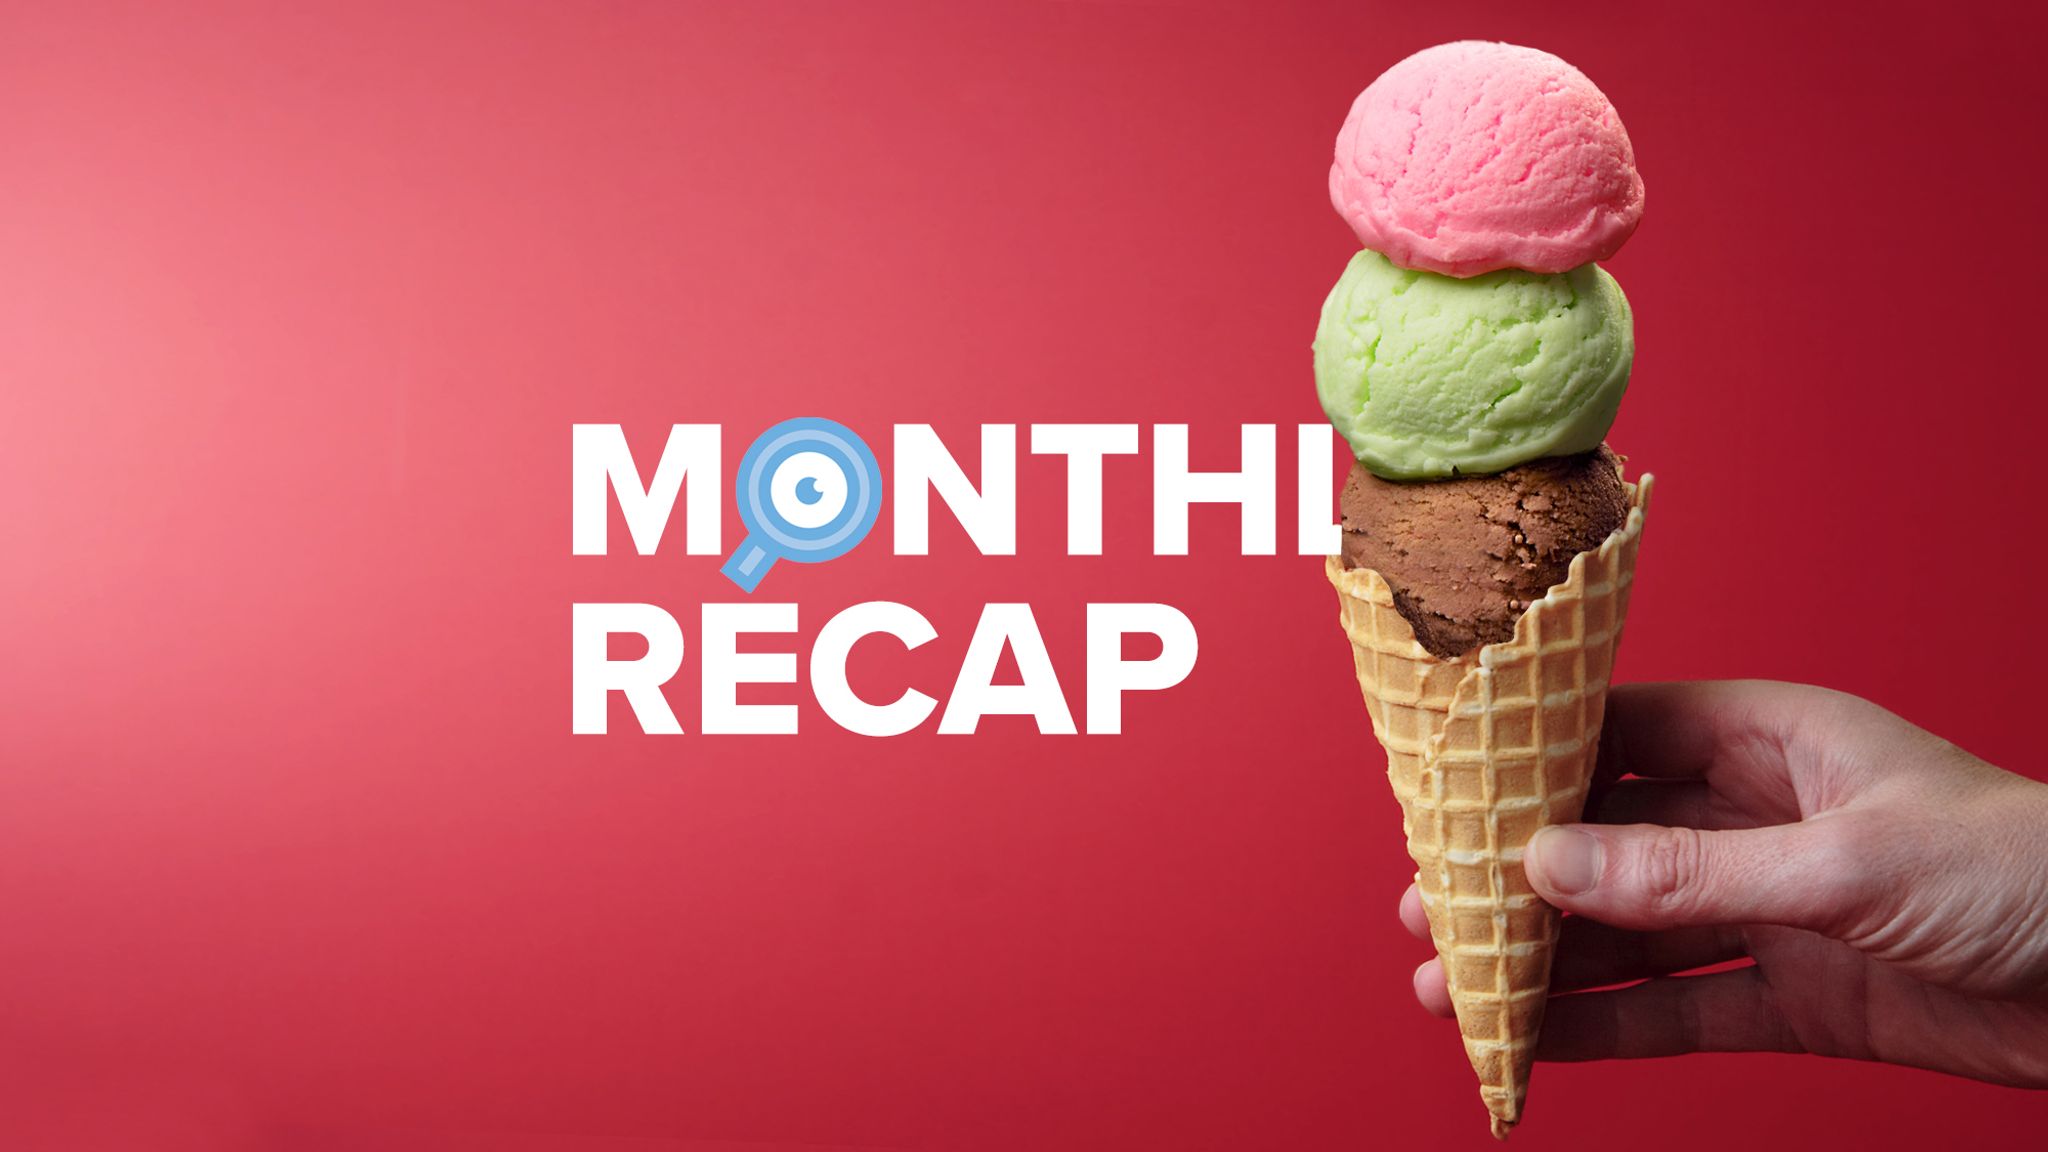 Image of CMS Critic Monthly Recap with ice cream cone superimposed